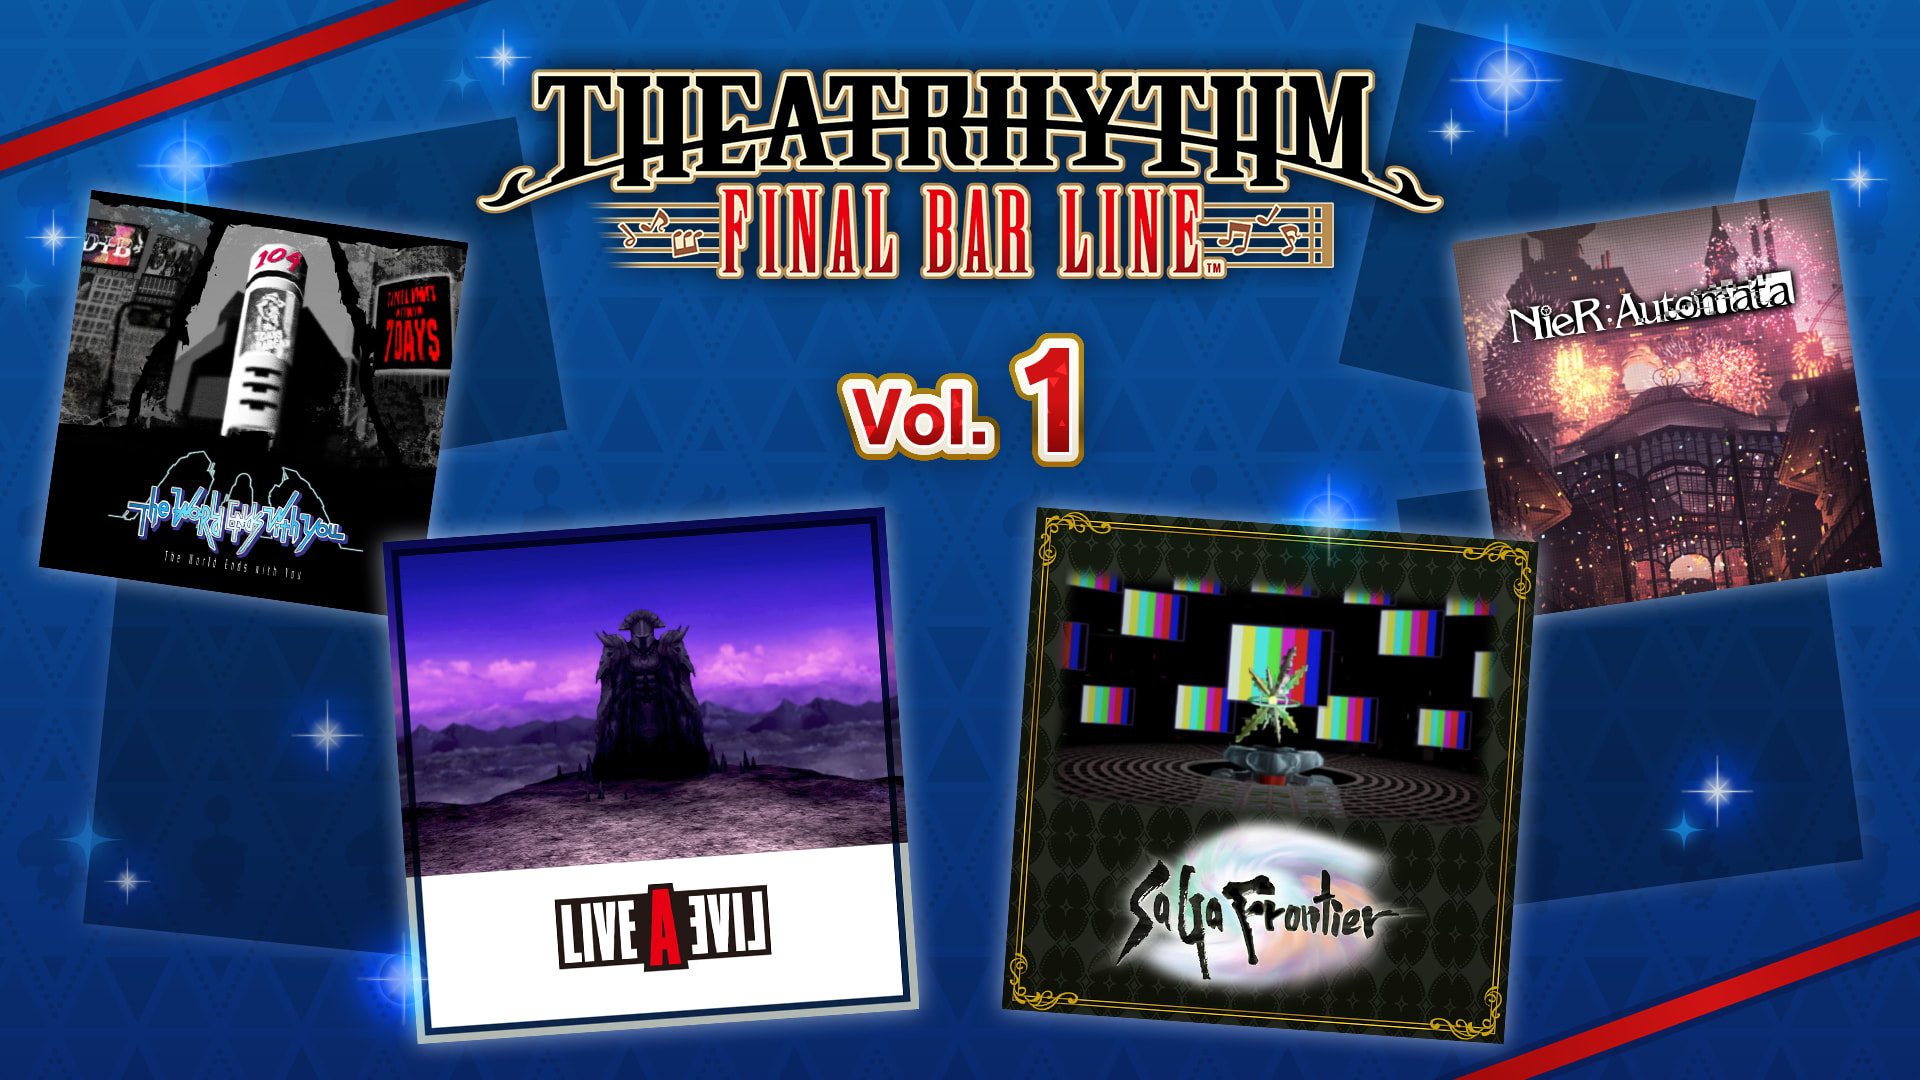 THEATRHYTHM FINAL BAR LINE Season Pass Vol. 1